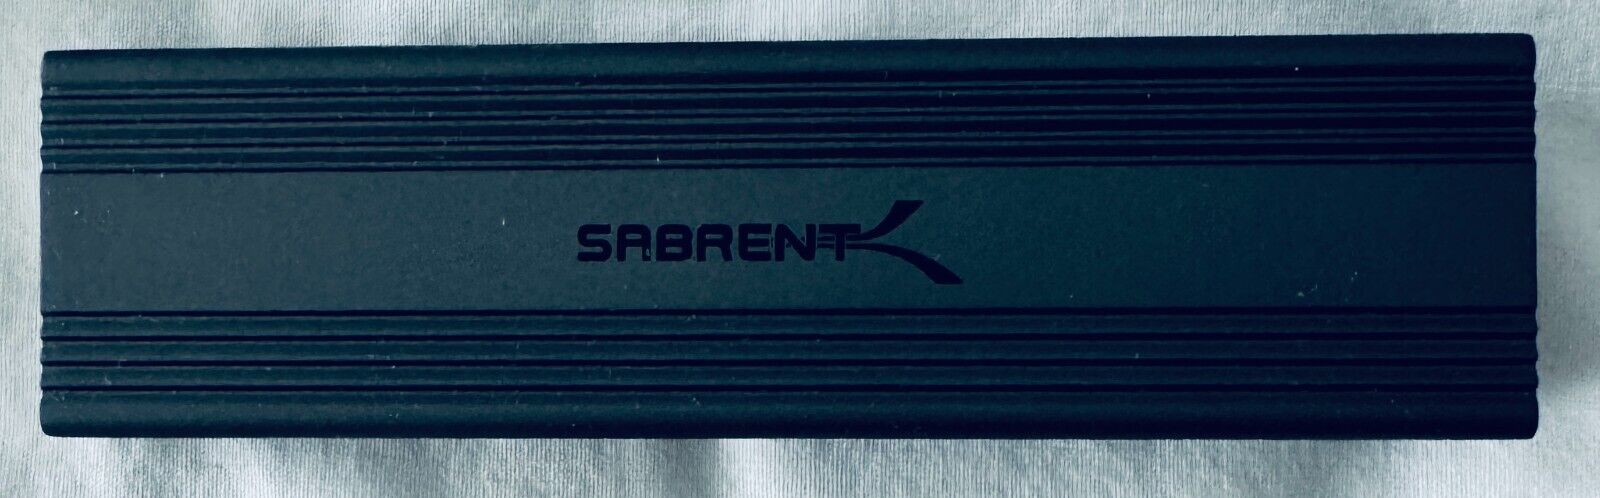 SABRENT EC-SNVE USB 3.2 Type C Tool Free Enclosure M.2 Pcie Nvme and SATA SSDs